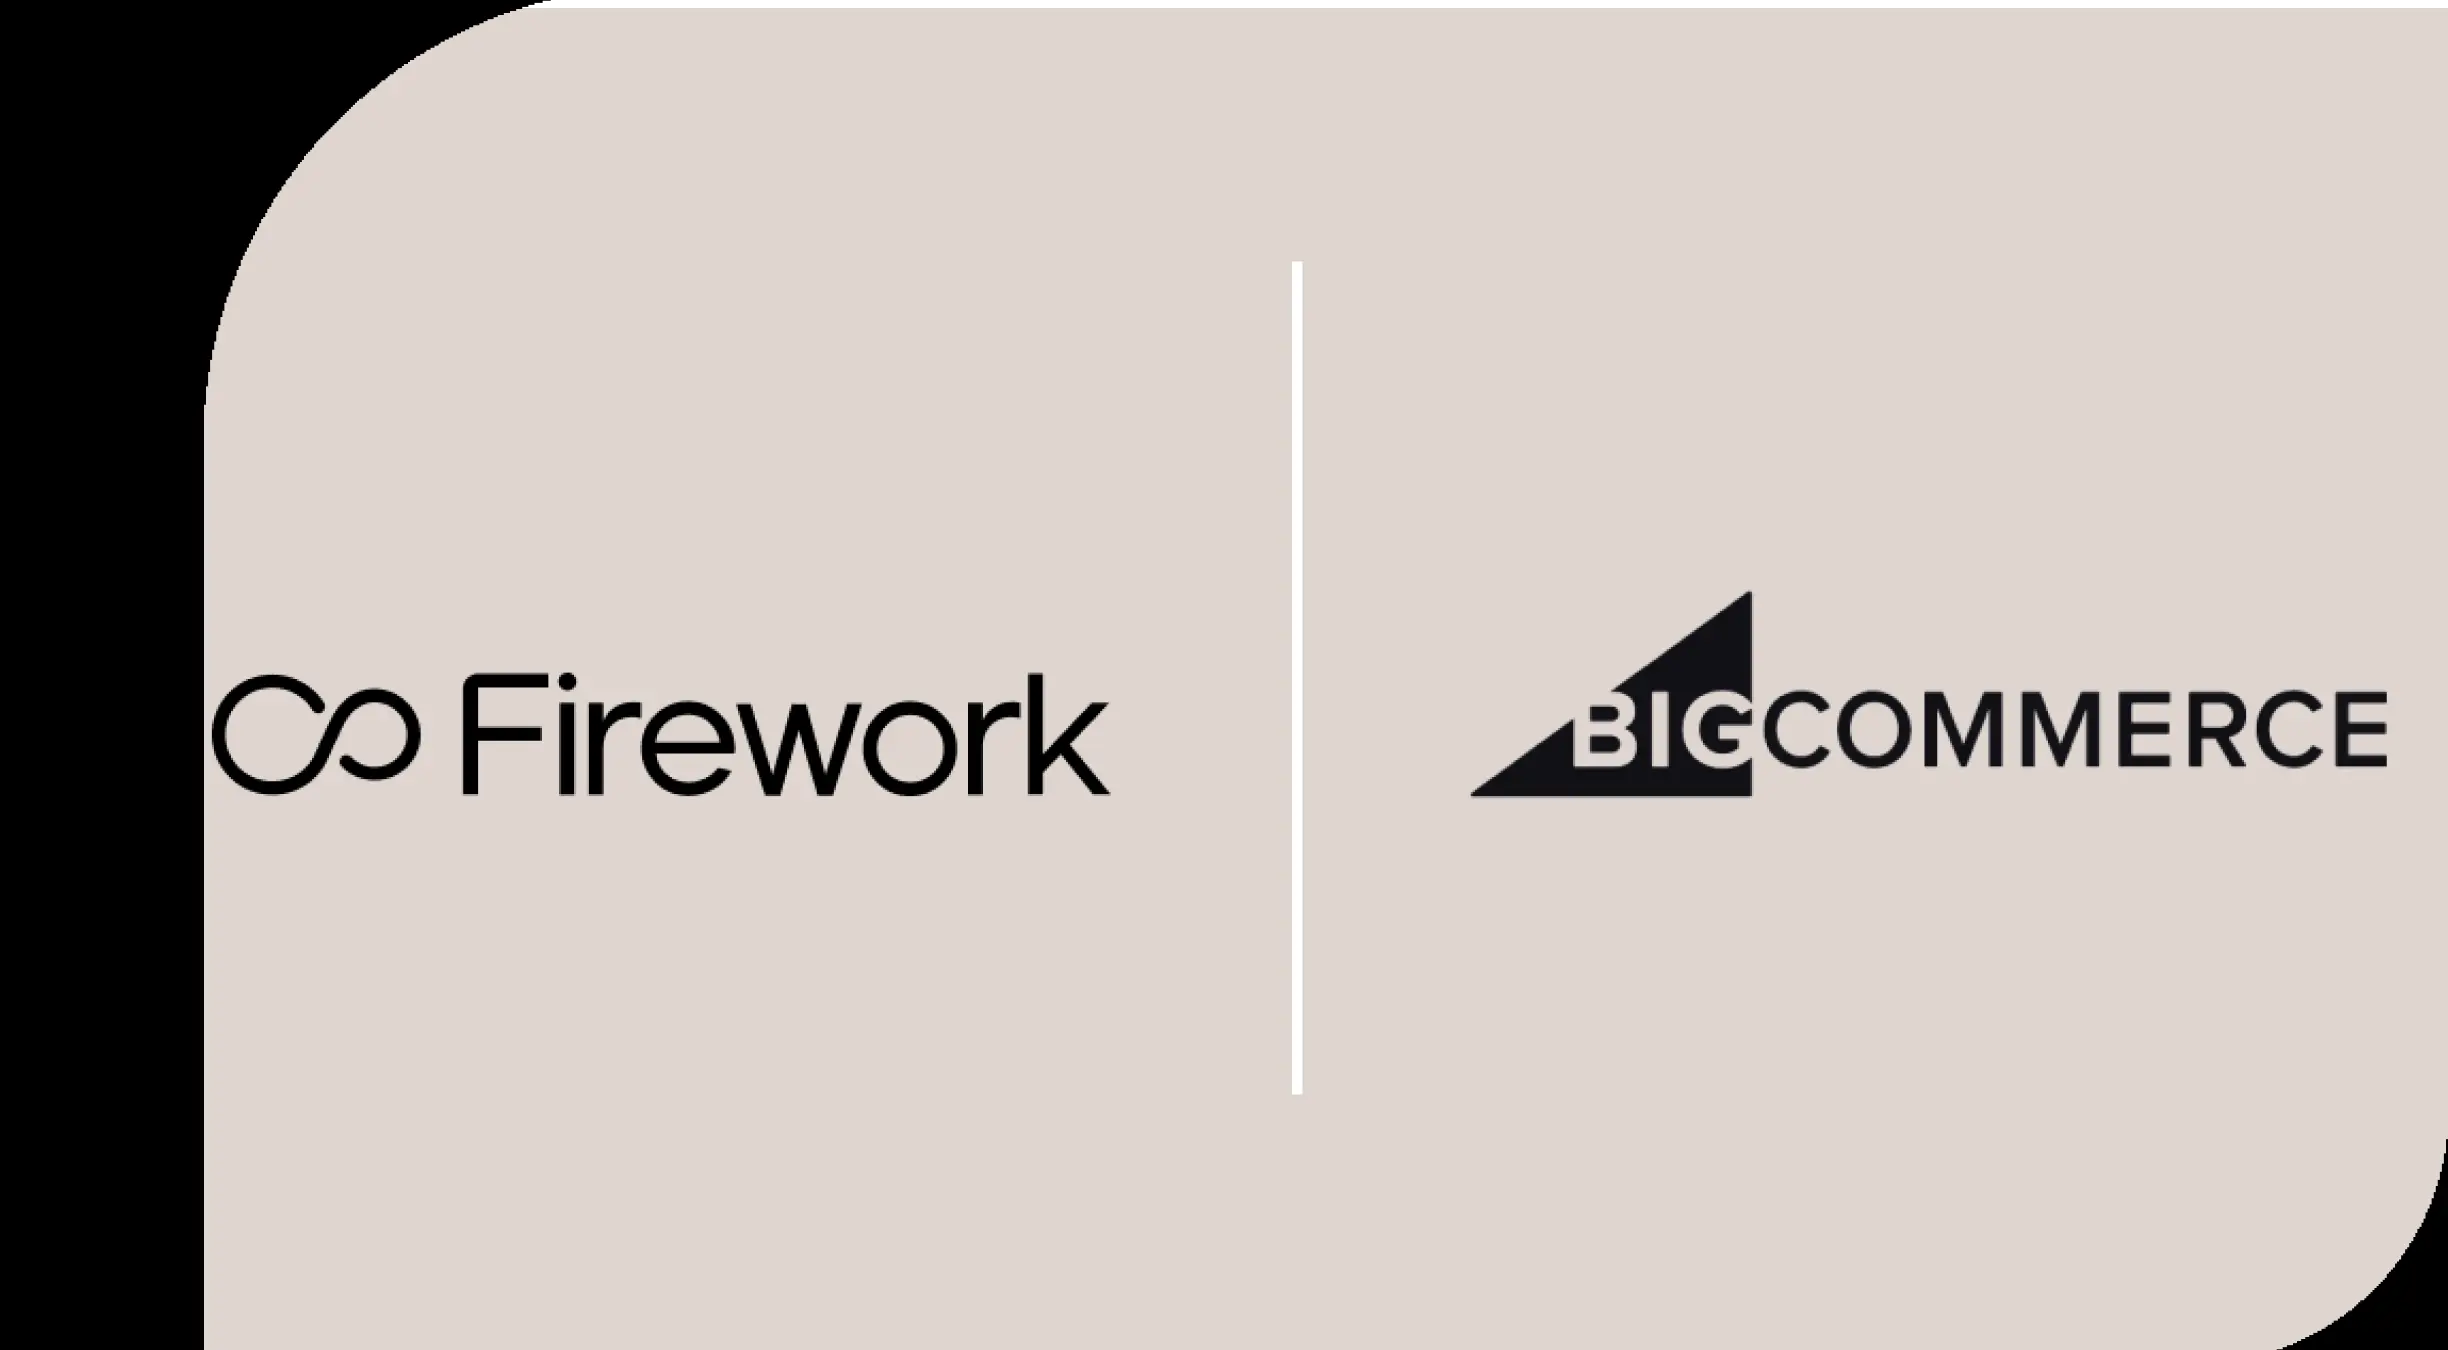 Firework-BigCommerce partnership